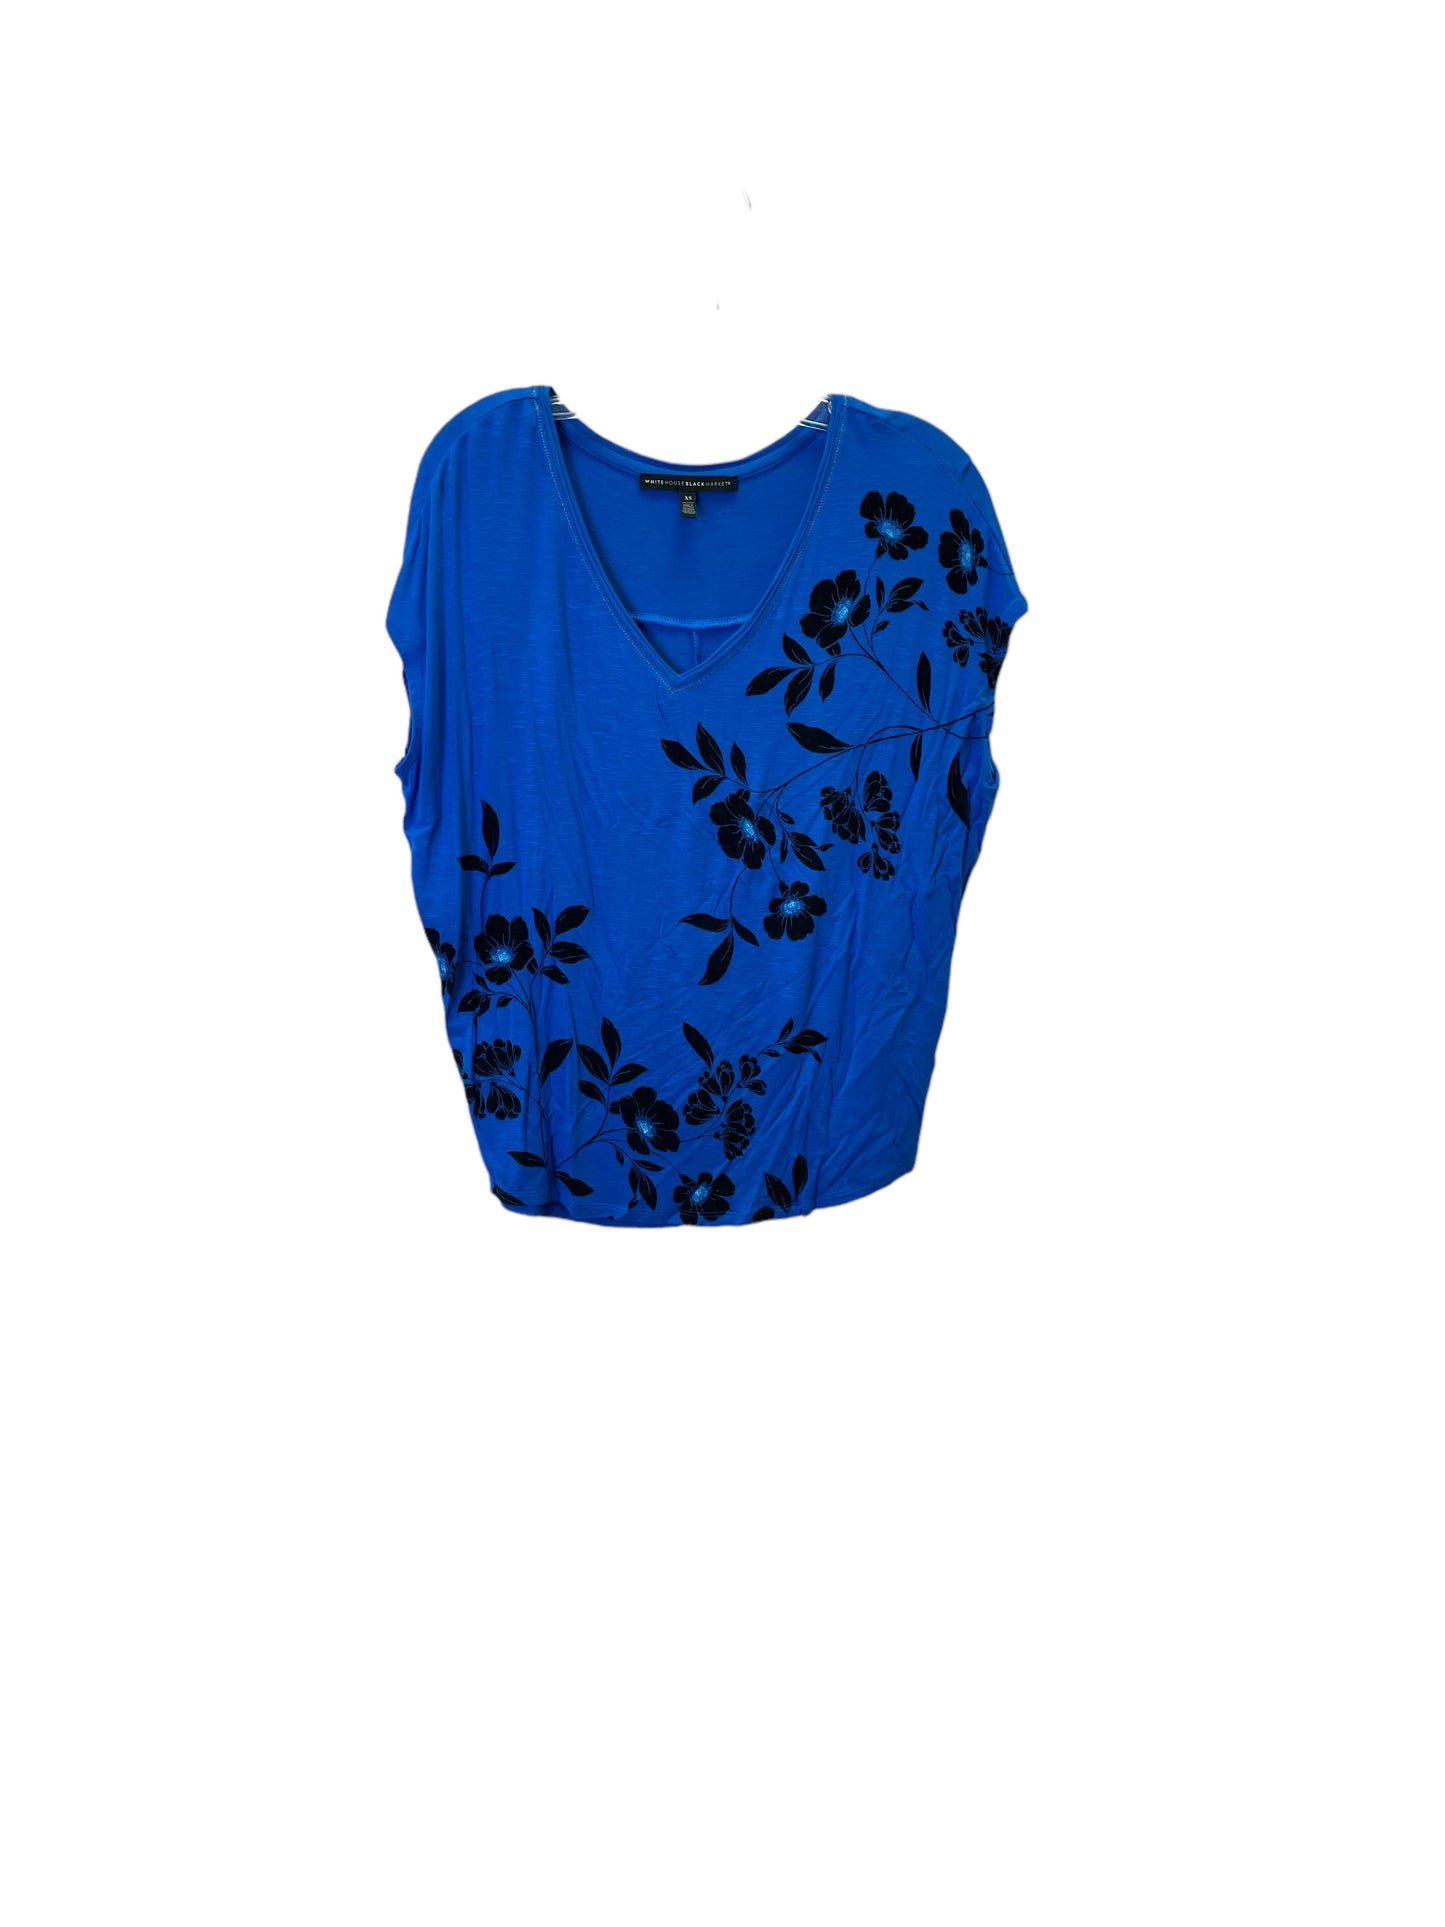 Black & Blue Top Sleeveless By White House Black Market, Size: Xs